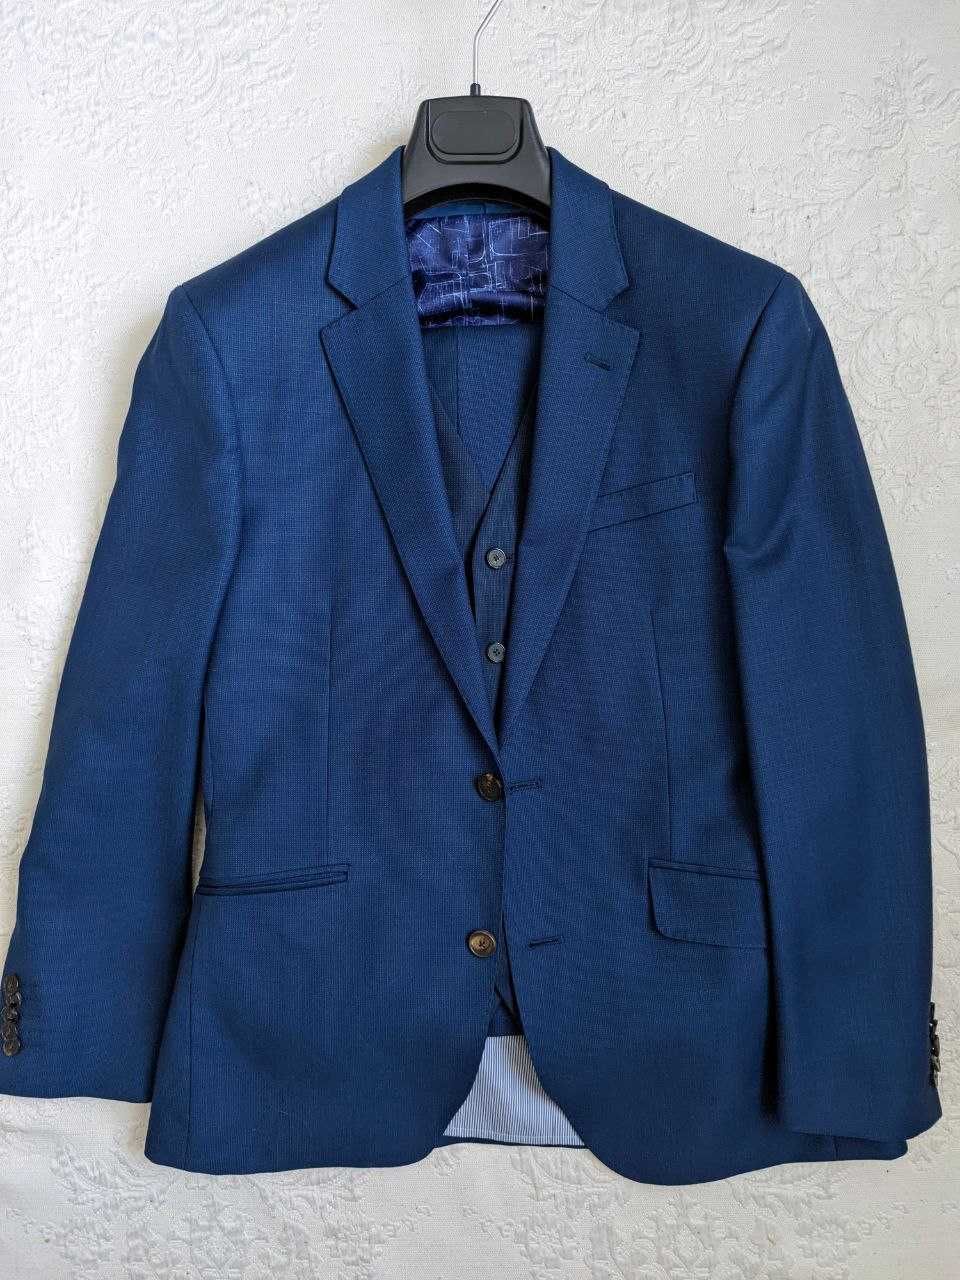 T.M Lewin St. London Three-piece slim fit blue suit костюм тройка